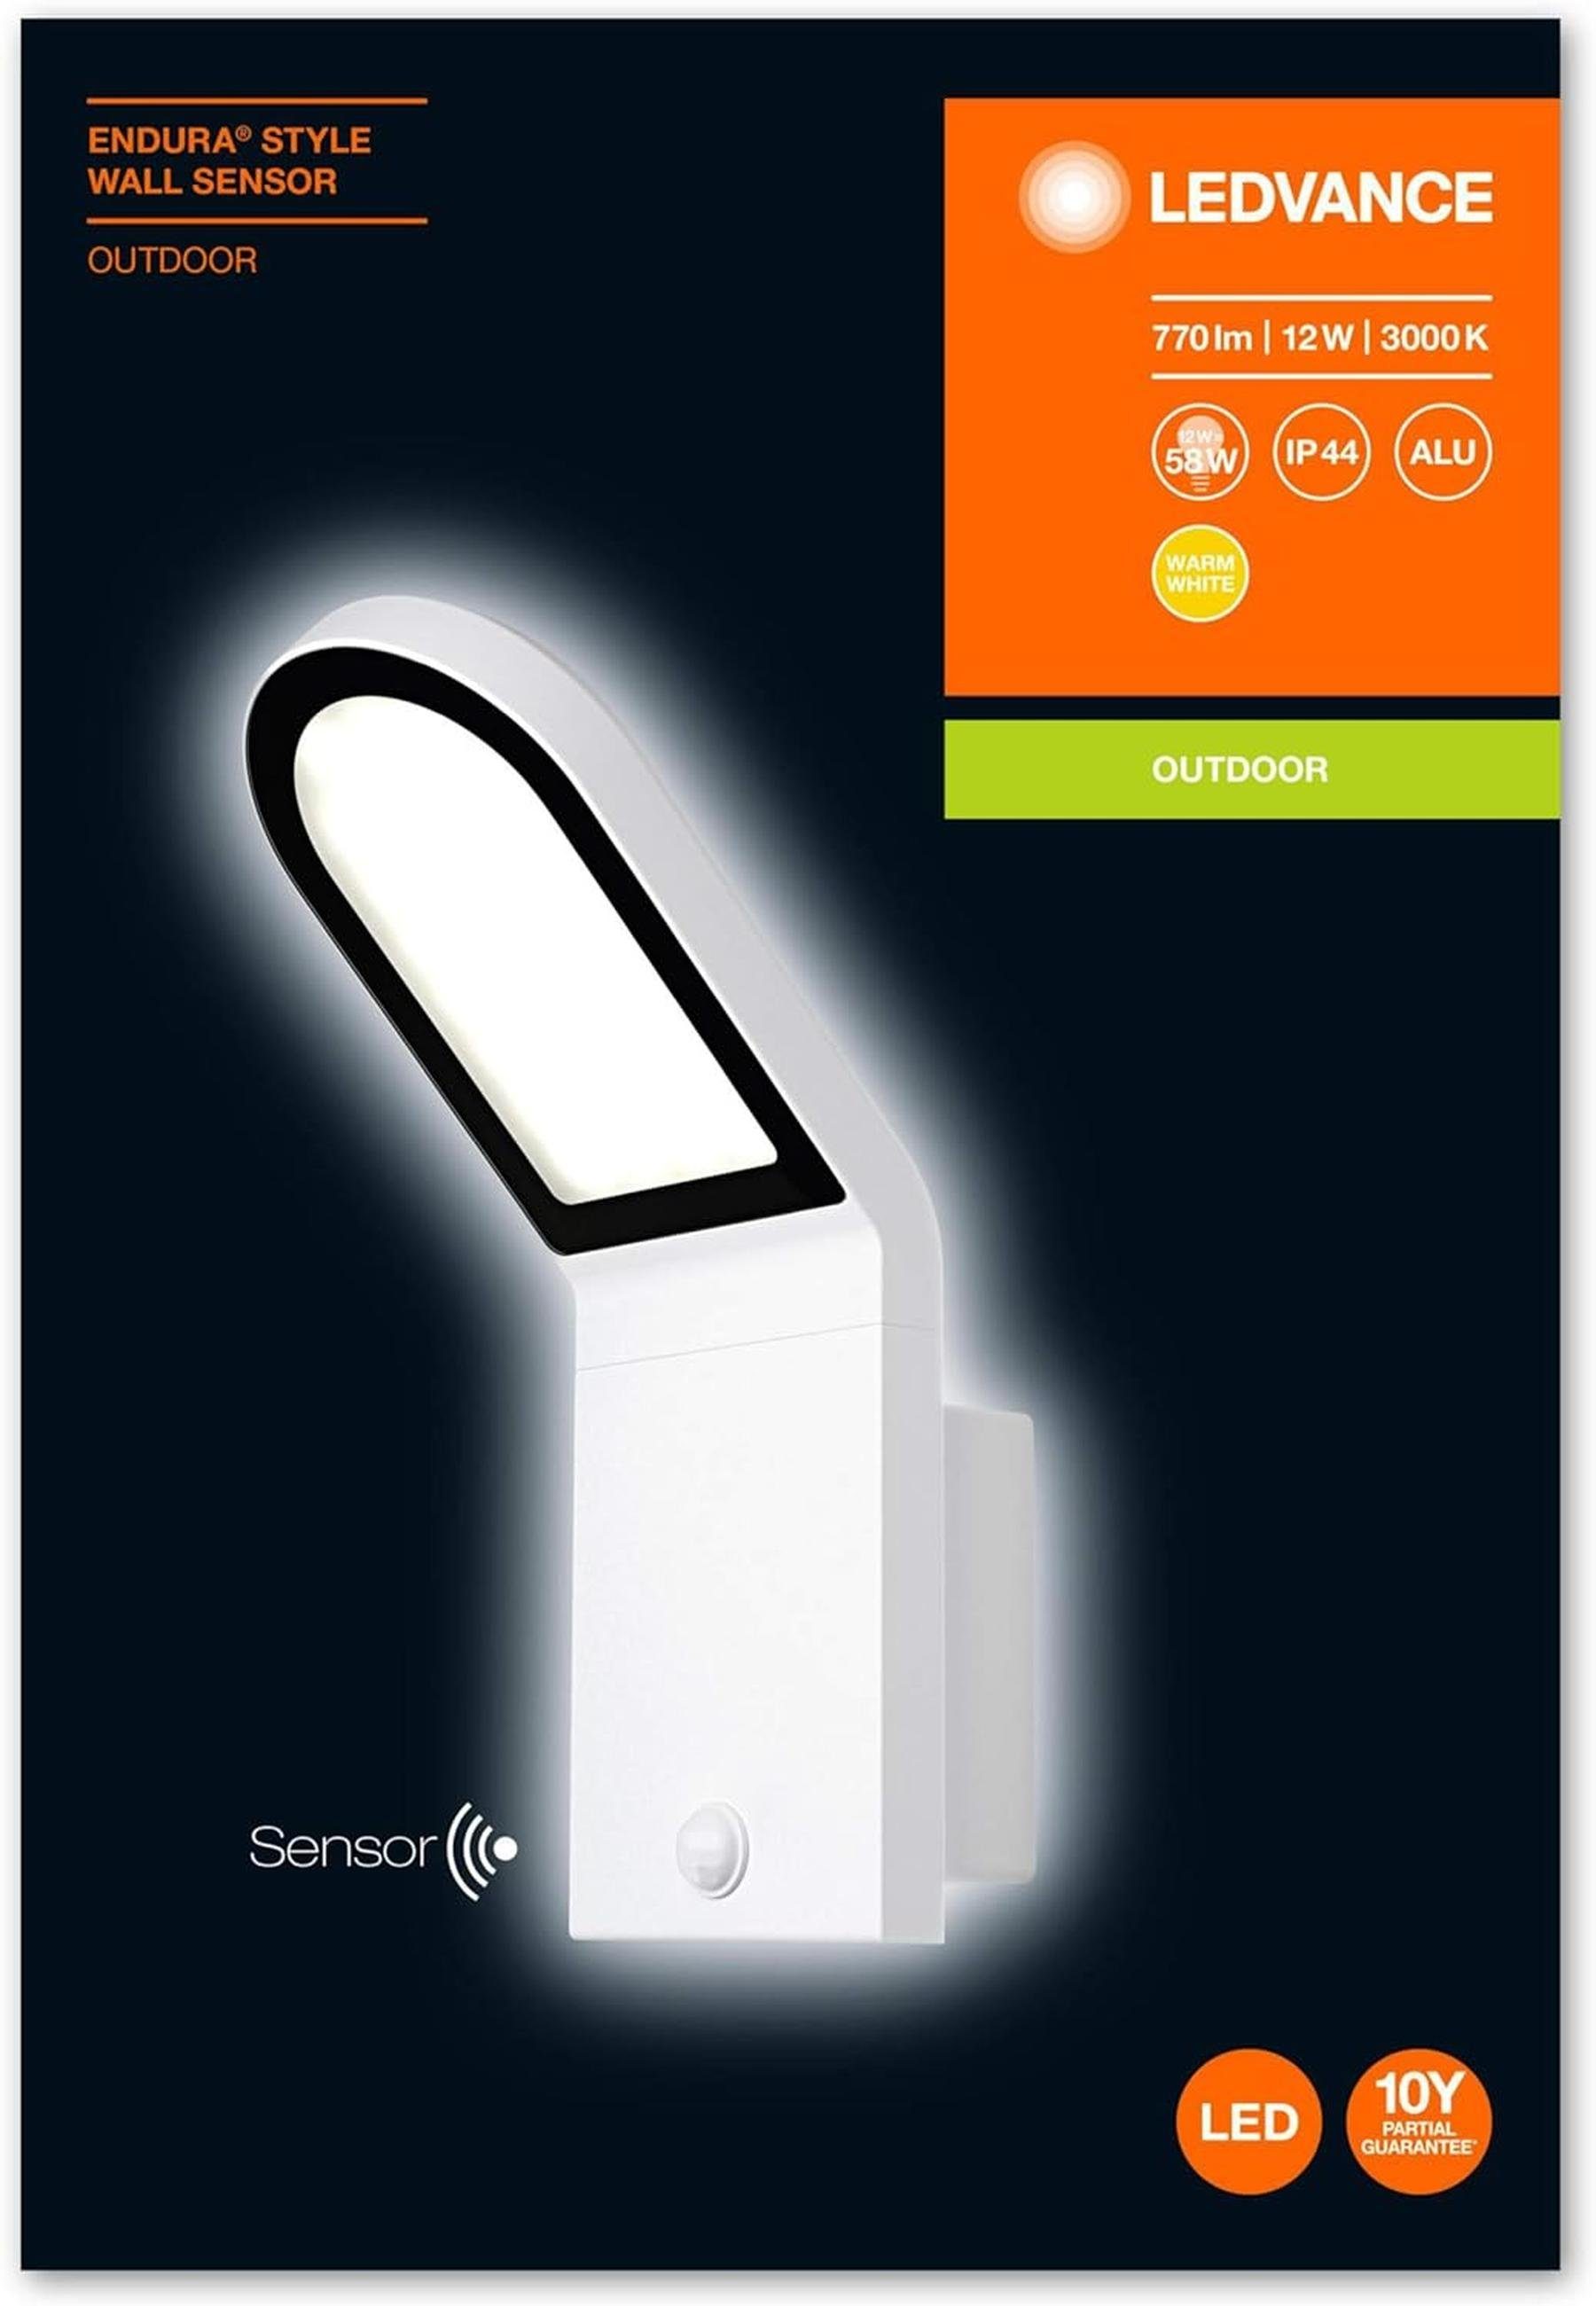 LED Ledvance wechselbar, warmweiss, Sensor, Led Außenlicht bewegungssensor mit Ledvance Außen-Wandleuchte